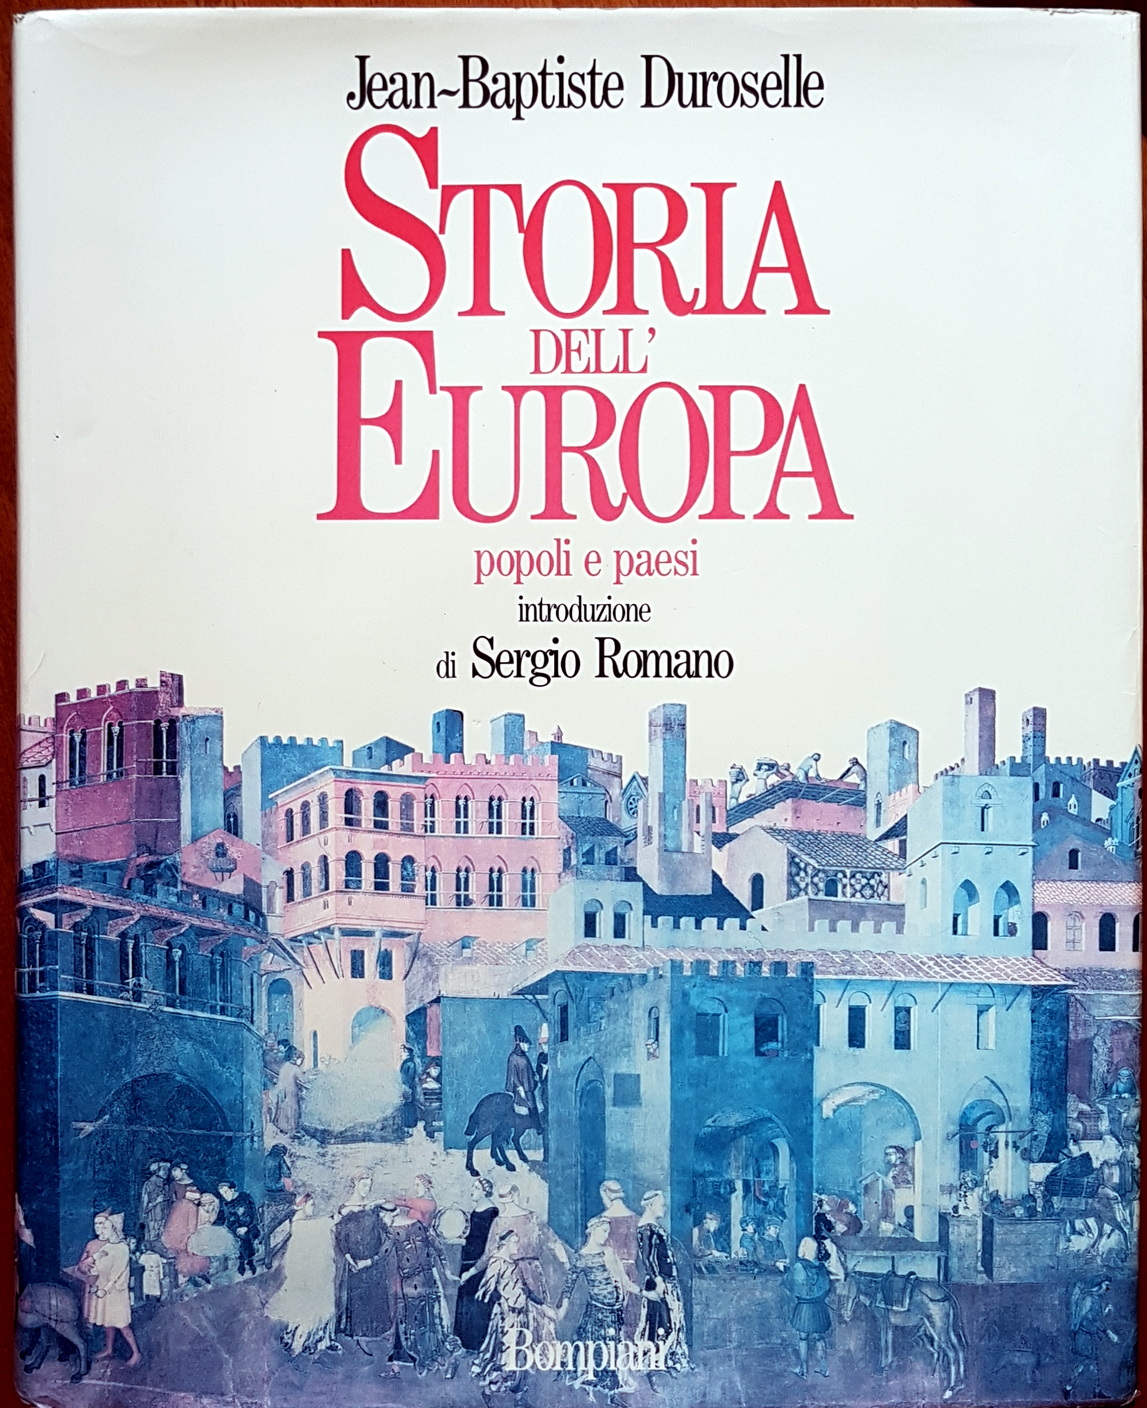 Jean-Baptiste Duroselle, Storia dell’Europa. Popoli e paesi, Ed. Bompiani, 1990